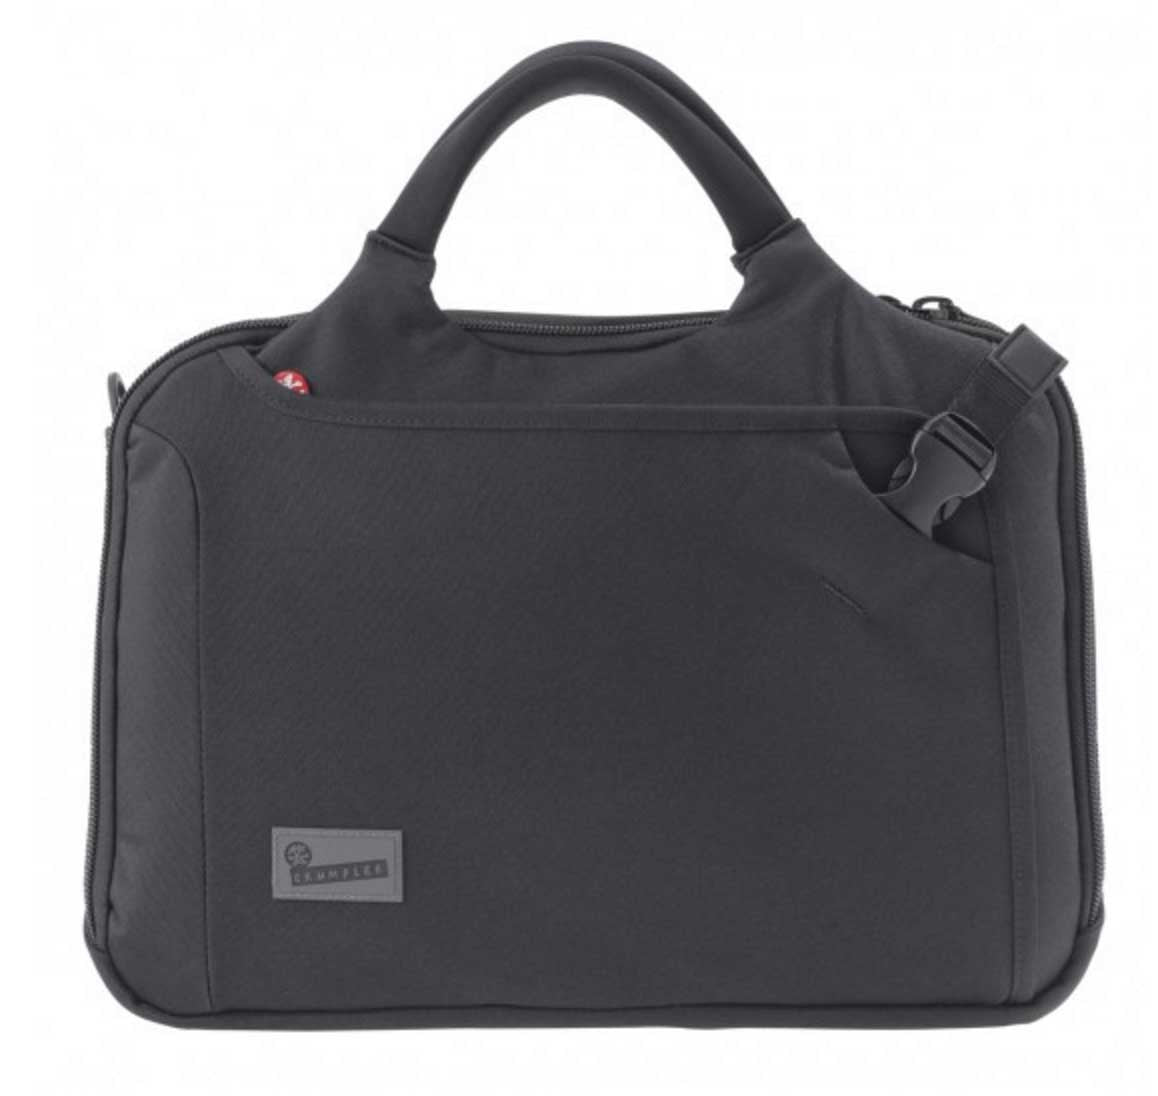 Crumpler Dry Red no 7 laptop briefcase, black